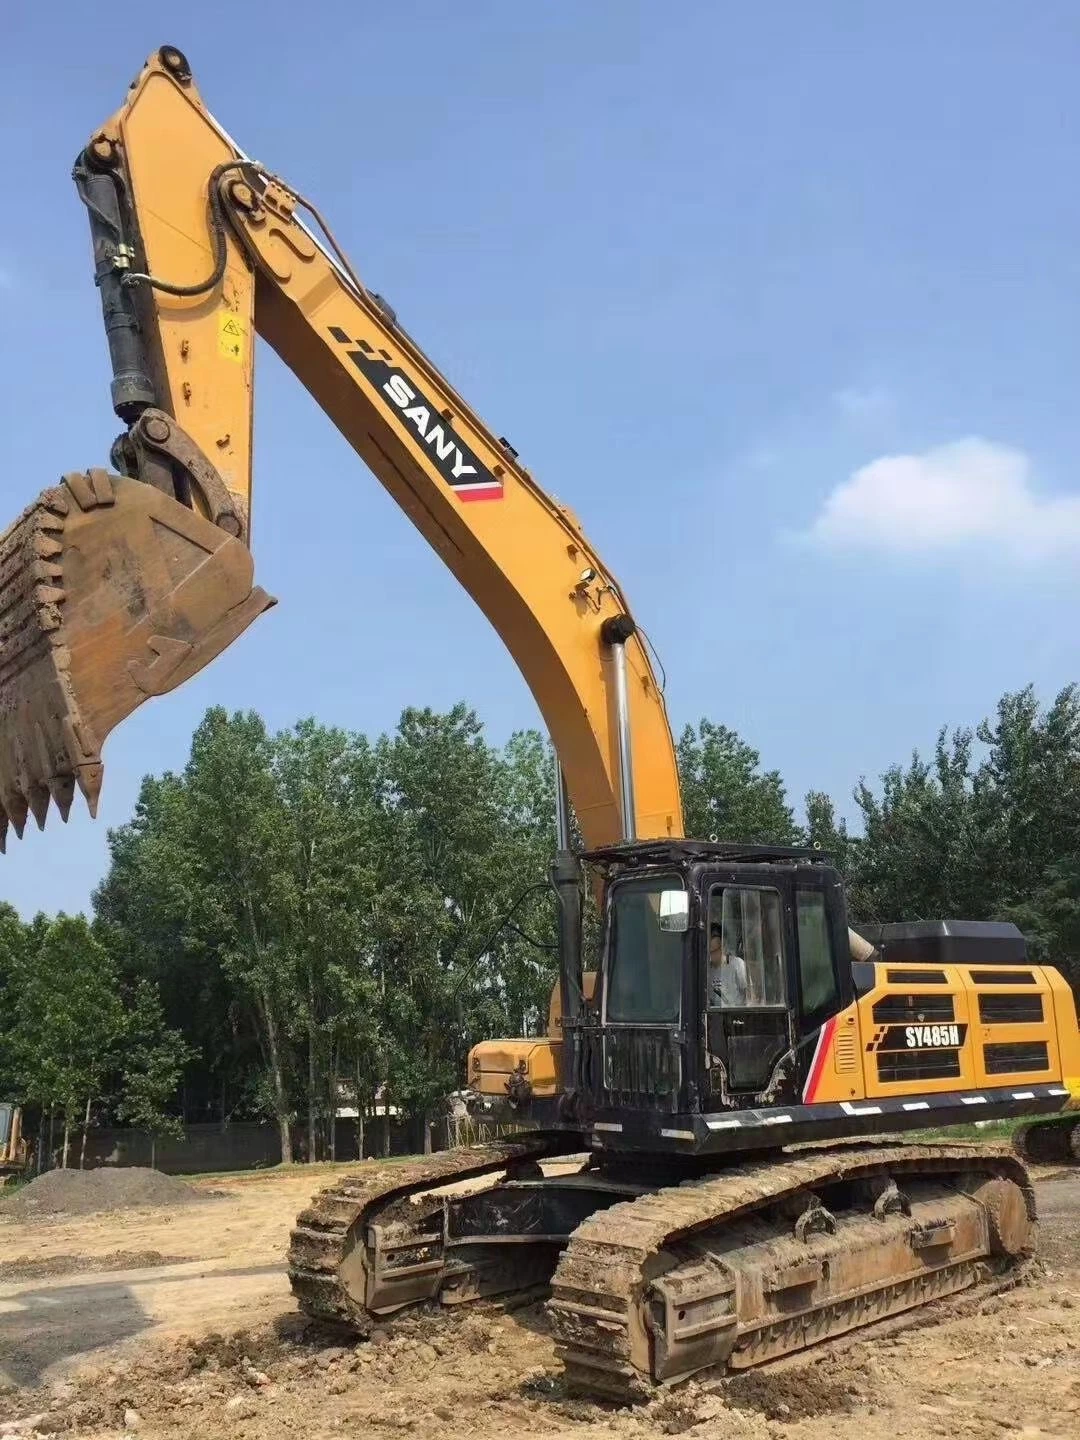 Second Hand Hydraulic Crawler Used Digger Excavators Big 49 Ton Construction Machinery Equipment Machine Excavadora Usada Sany Sy485h